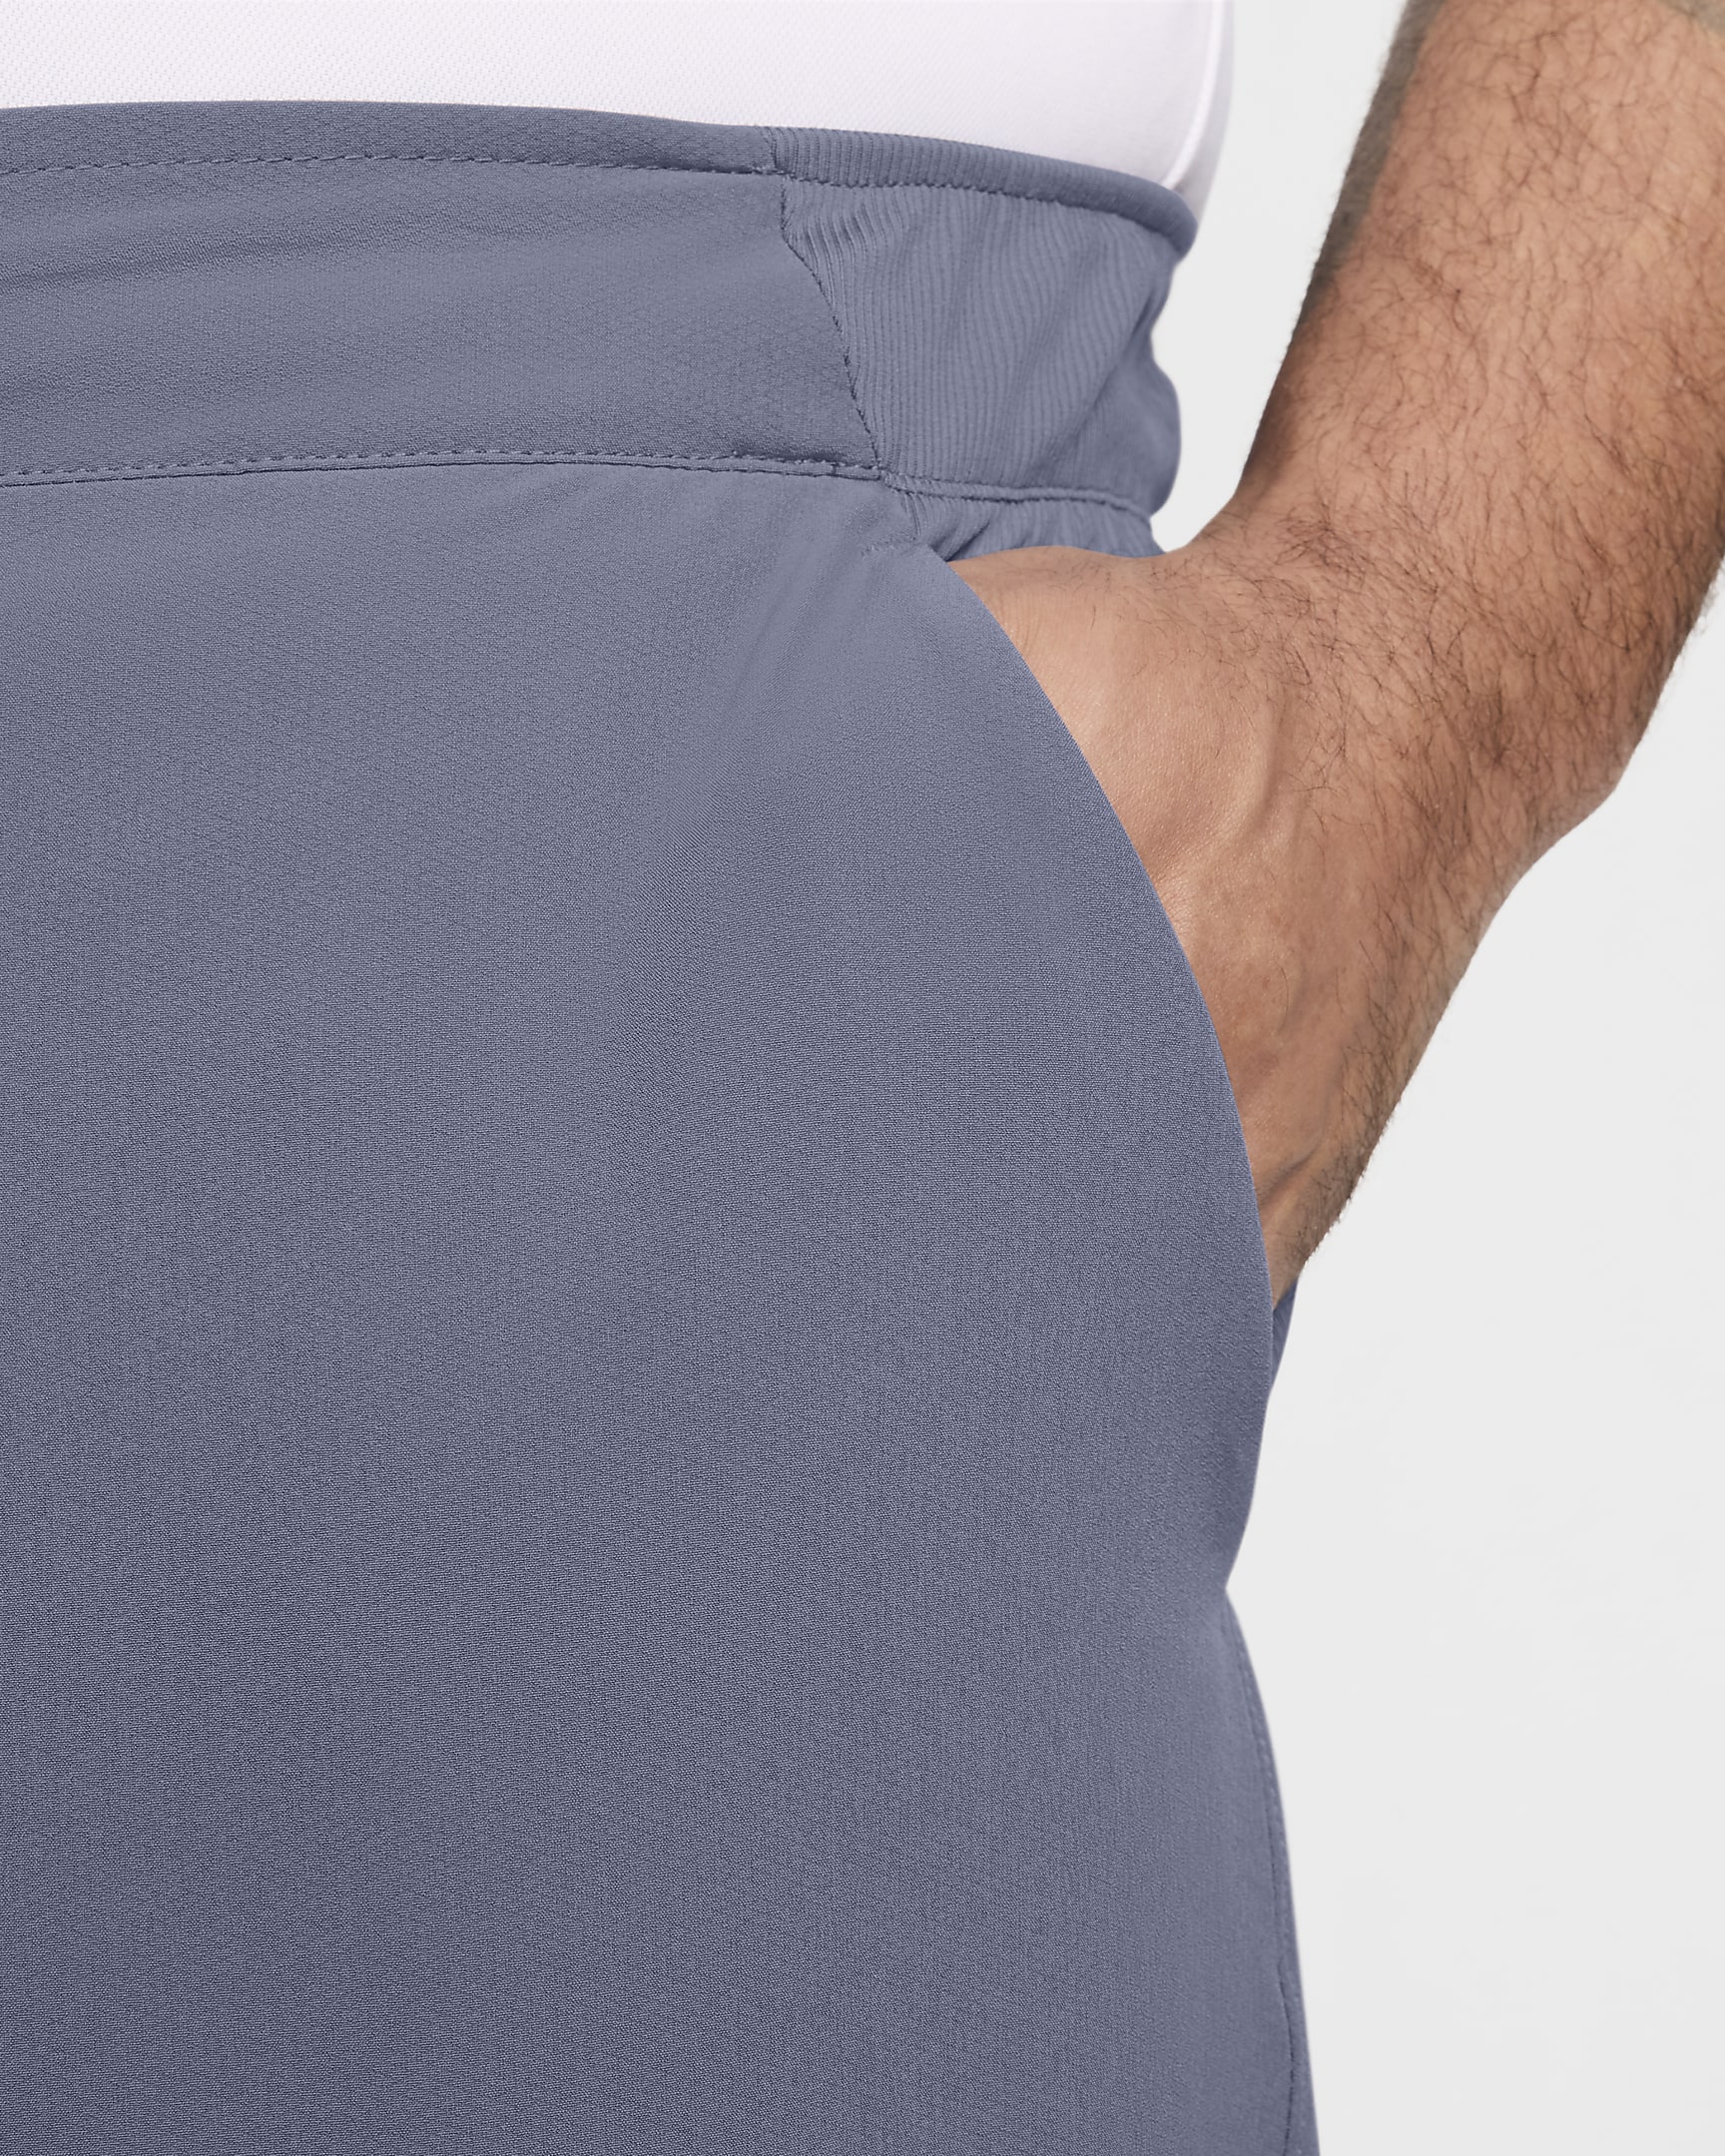 Nike Golf Club Men's Dri-FIT Golf Trousers - Light Carbon/White